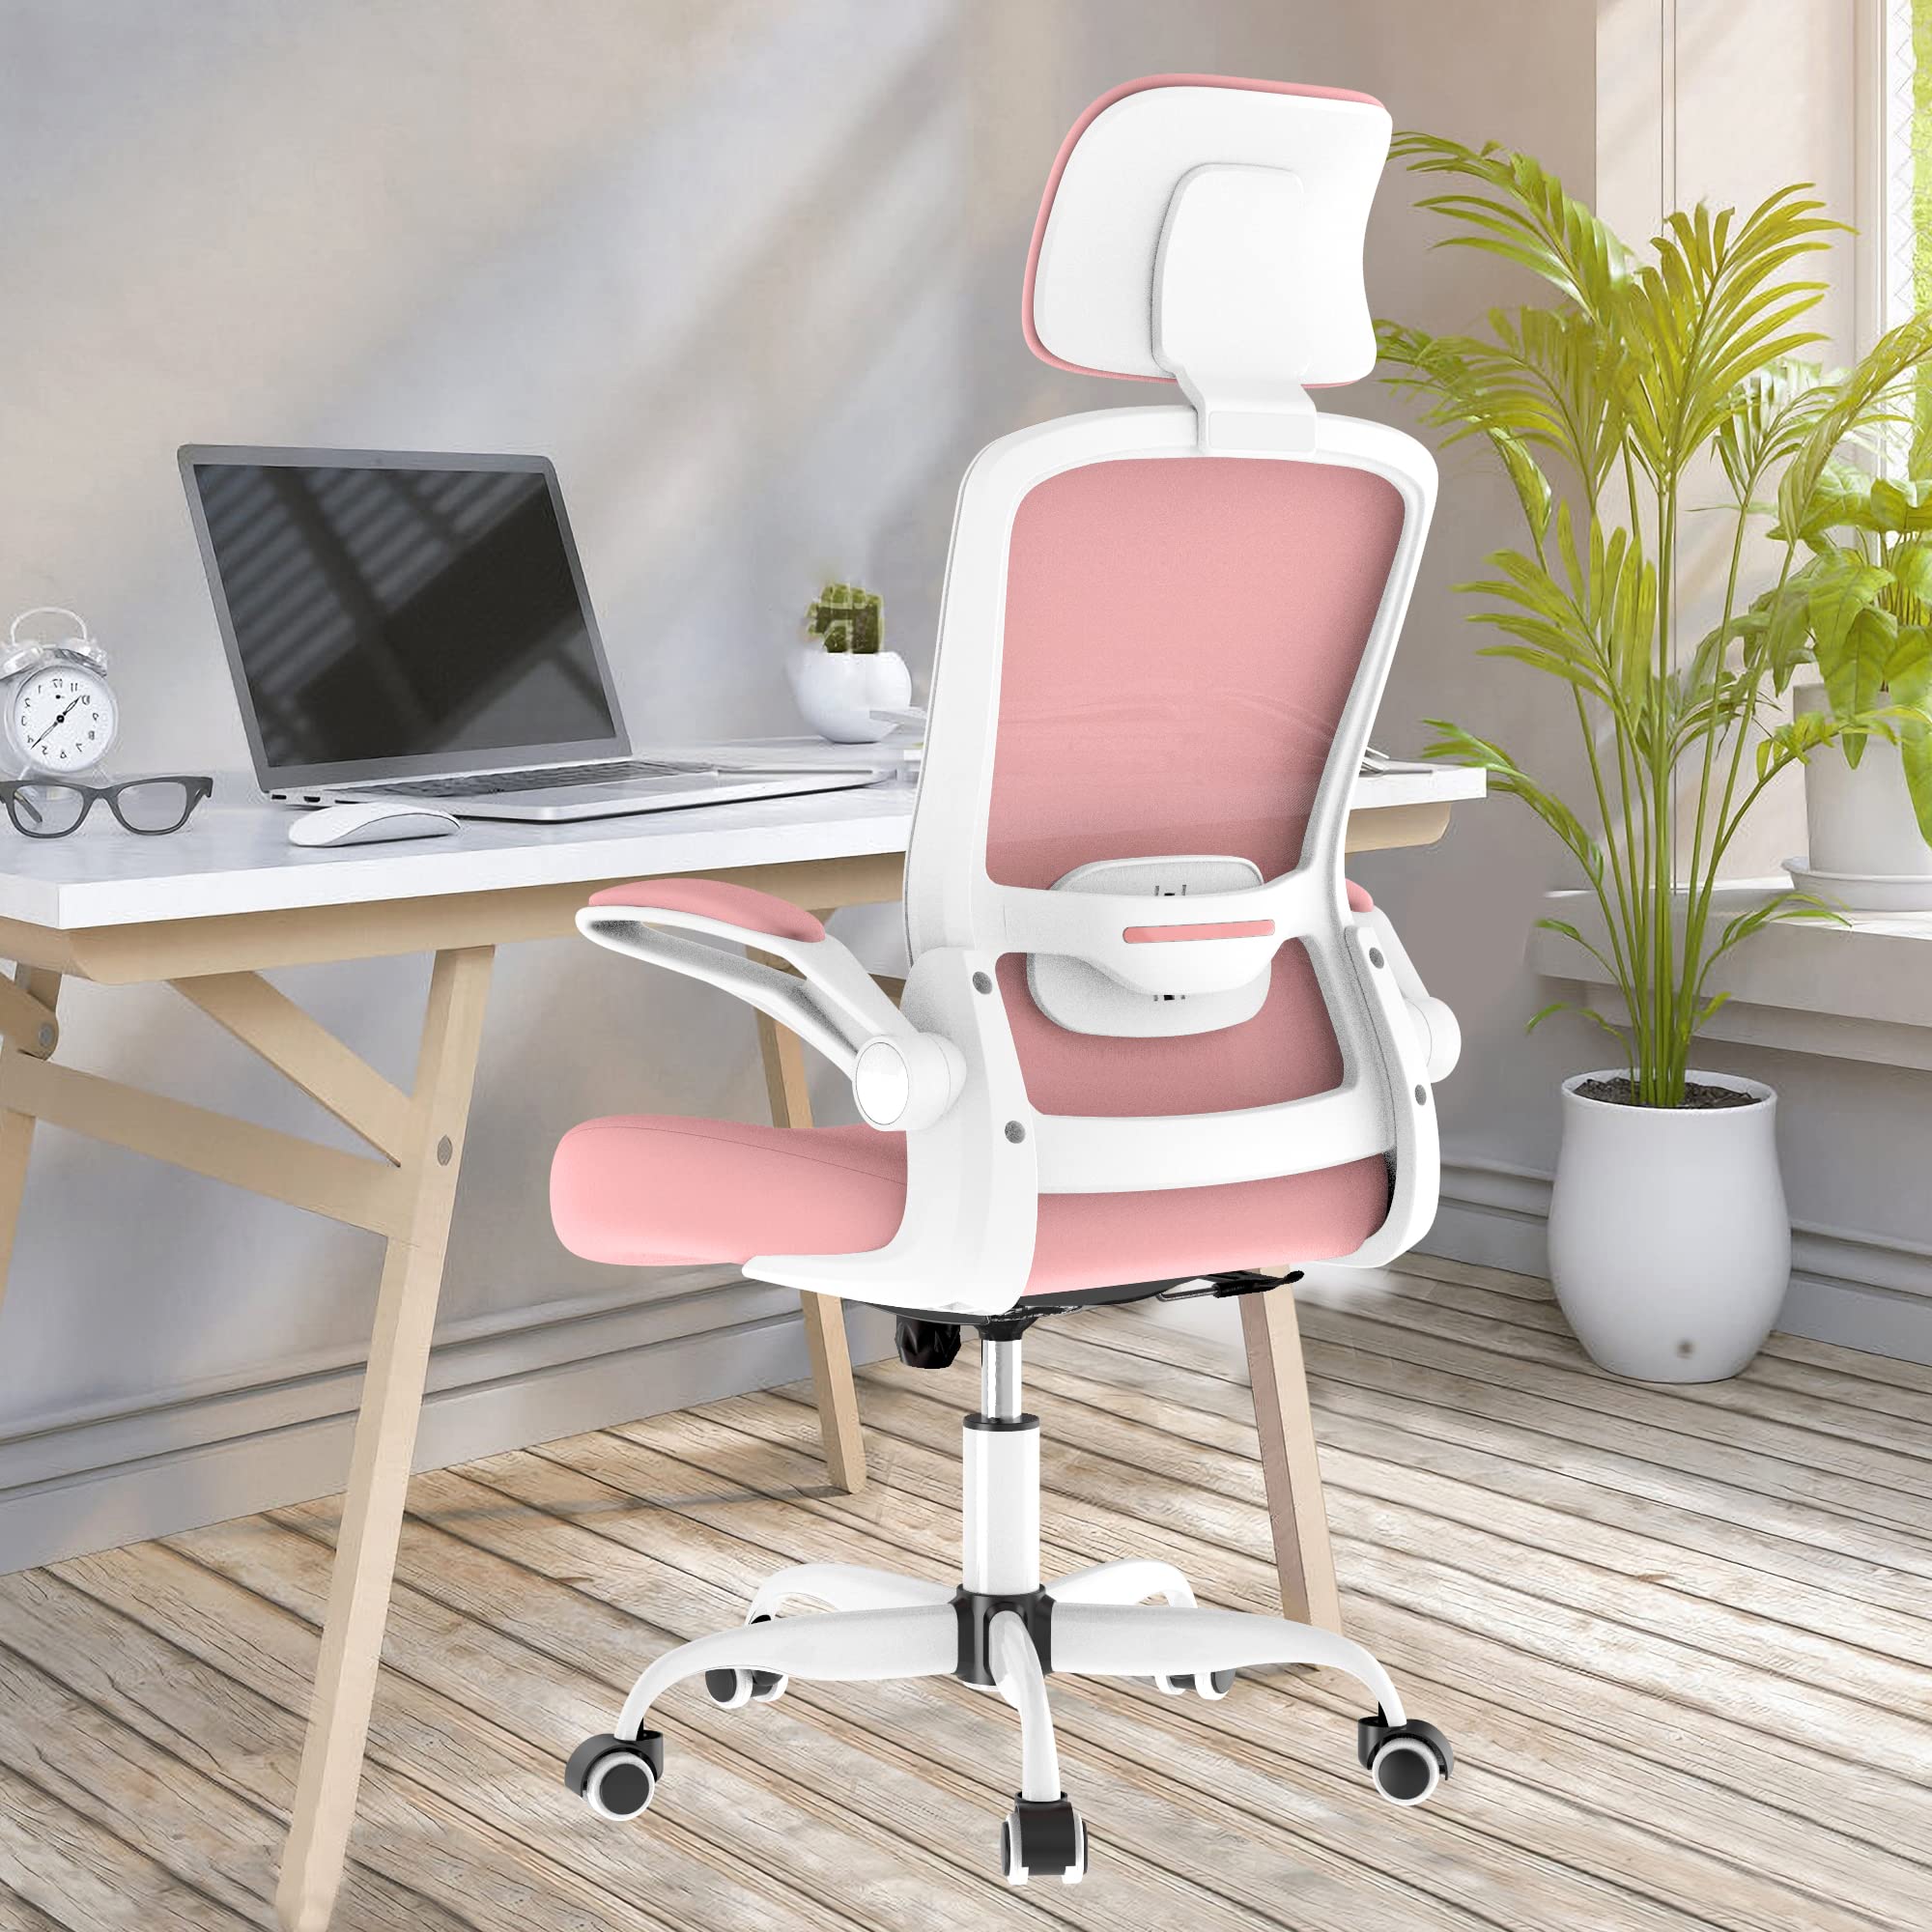 Mimoglad Ergonomic Office Chair